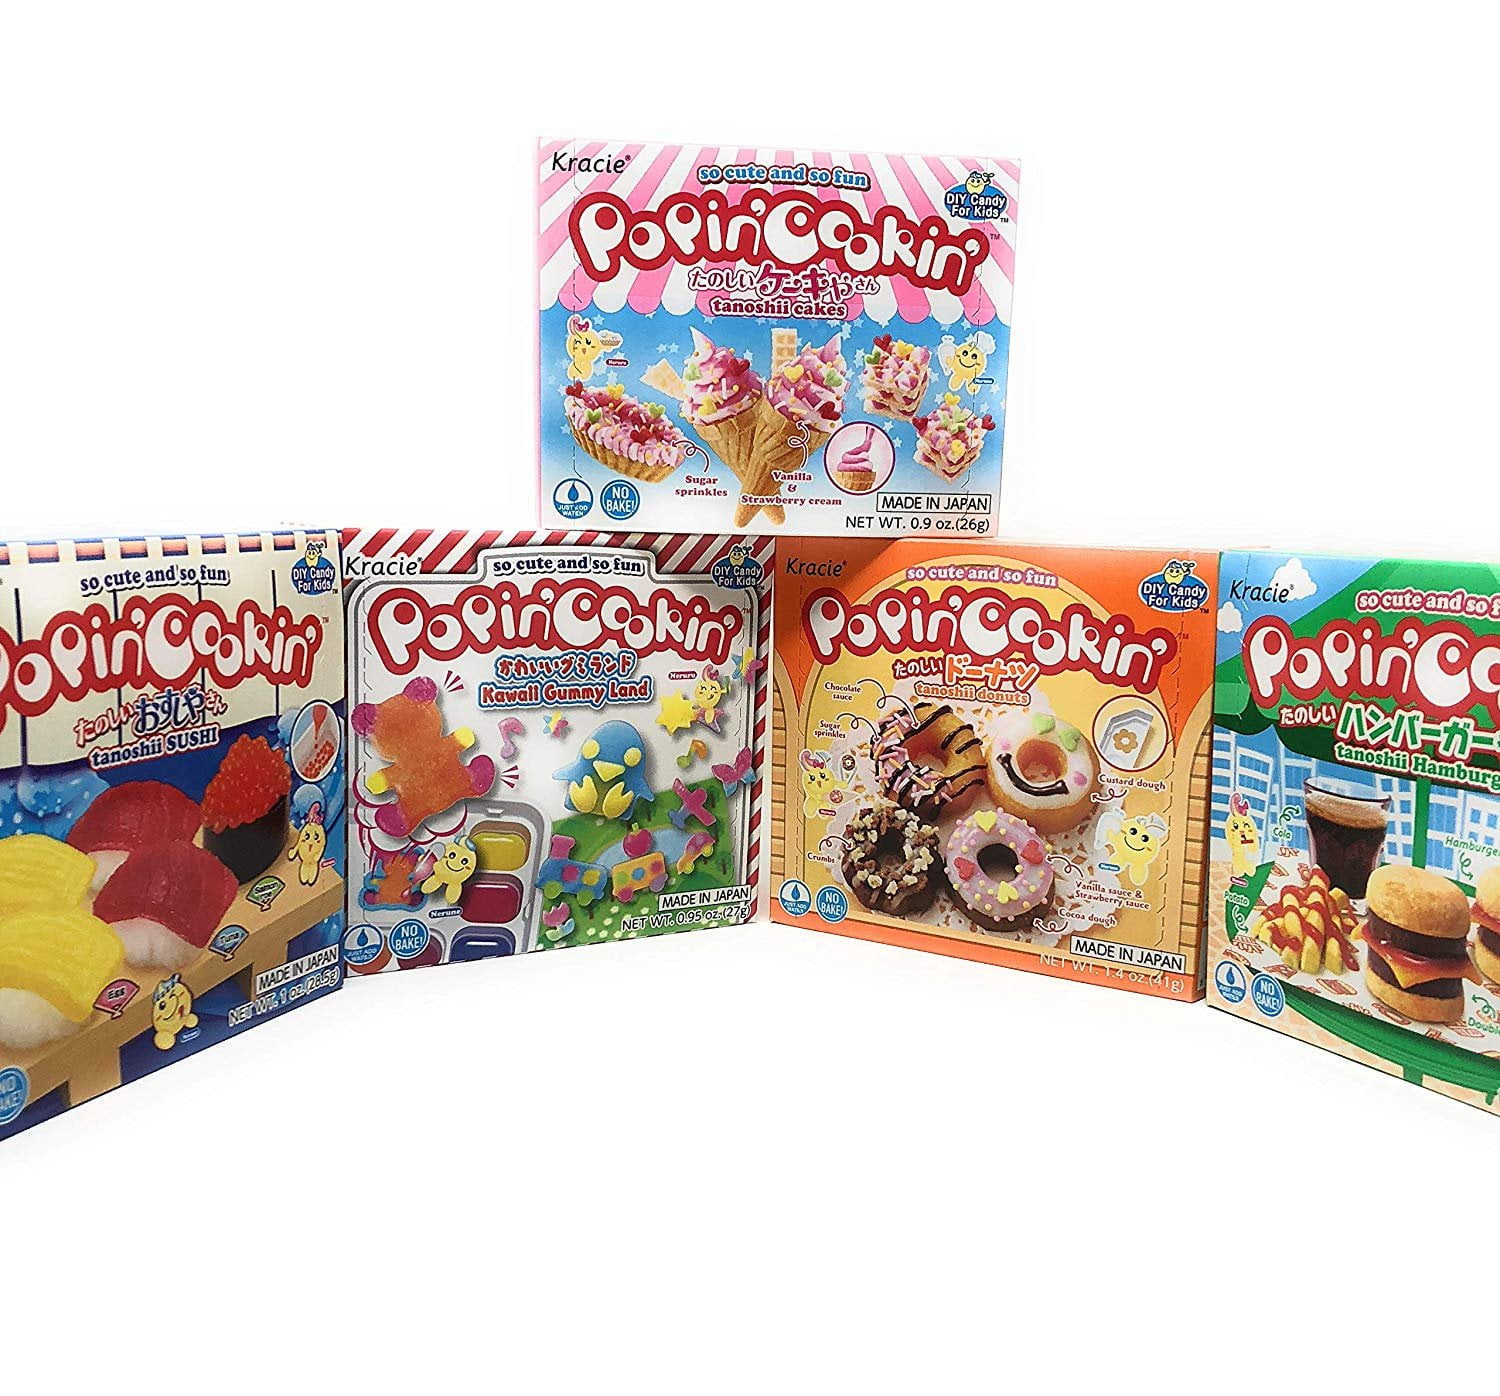 Popin' Cookin'™ - Tanoshii Bento DIY Candy Kit for Kids (Product